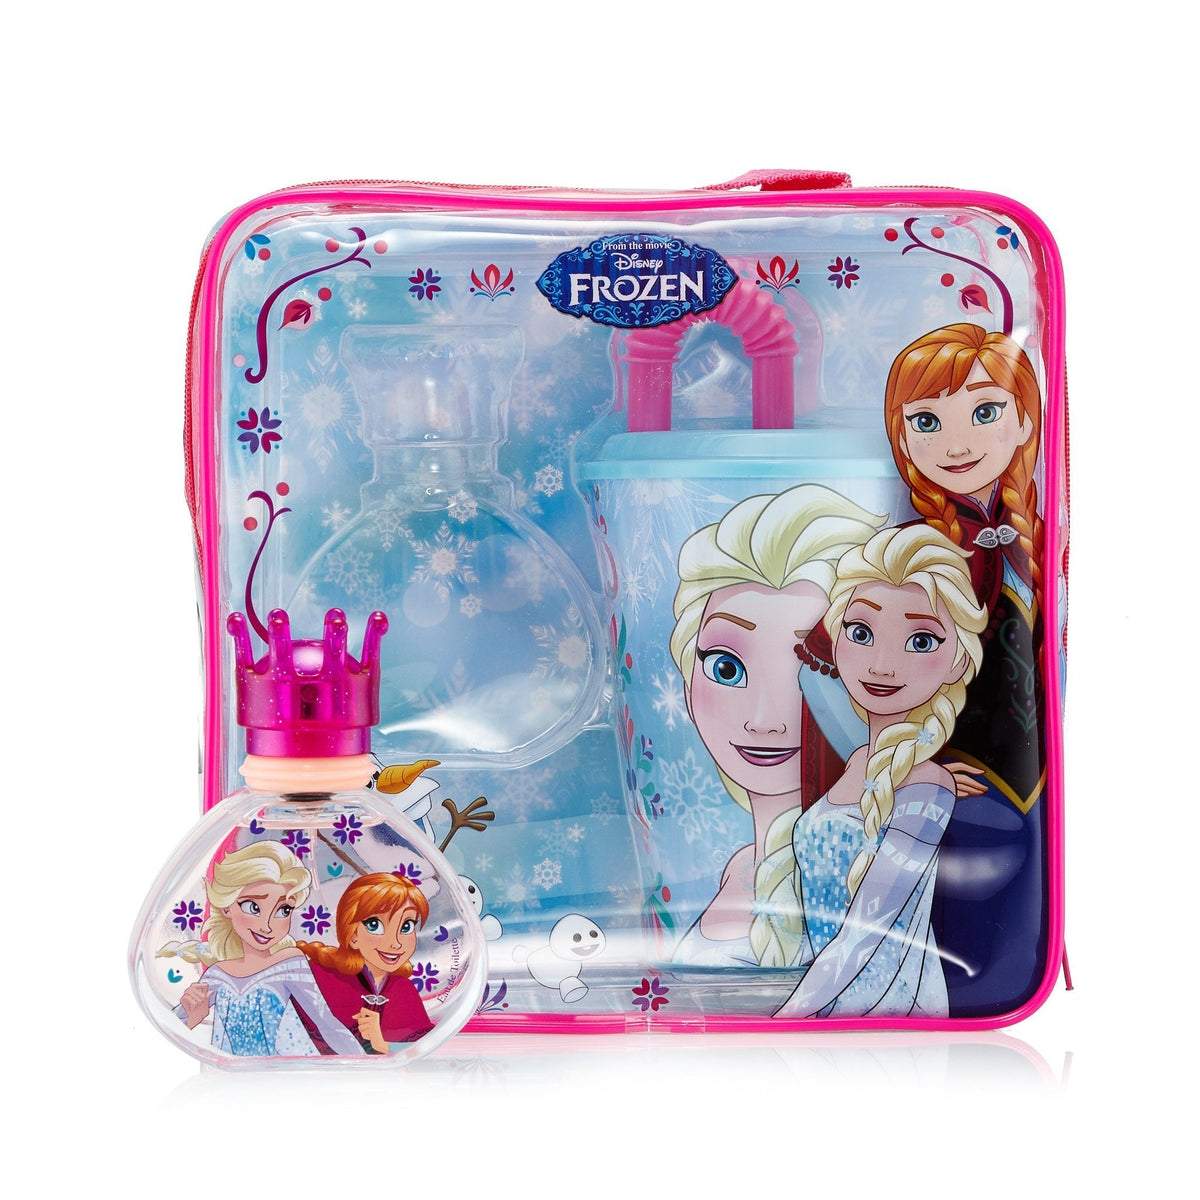 Frozen Lunch Box Gift Set for Girls by Disney 1.7 oz.